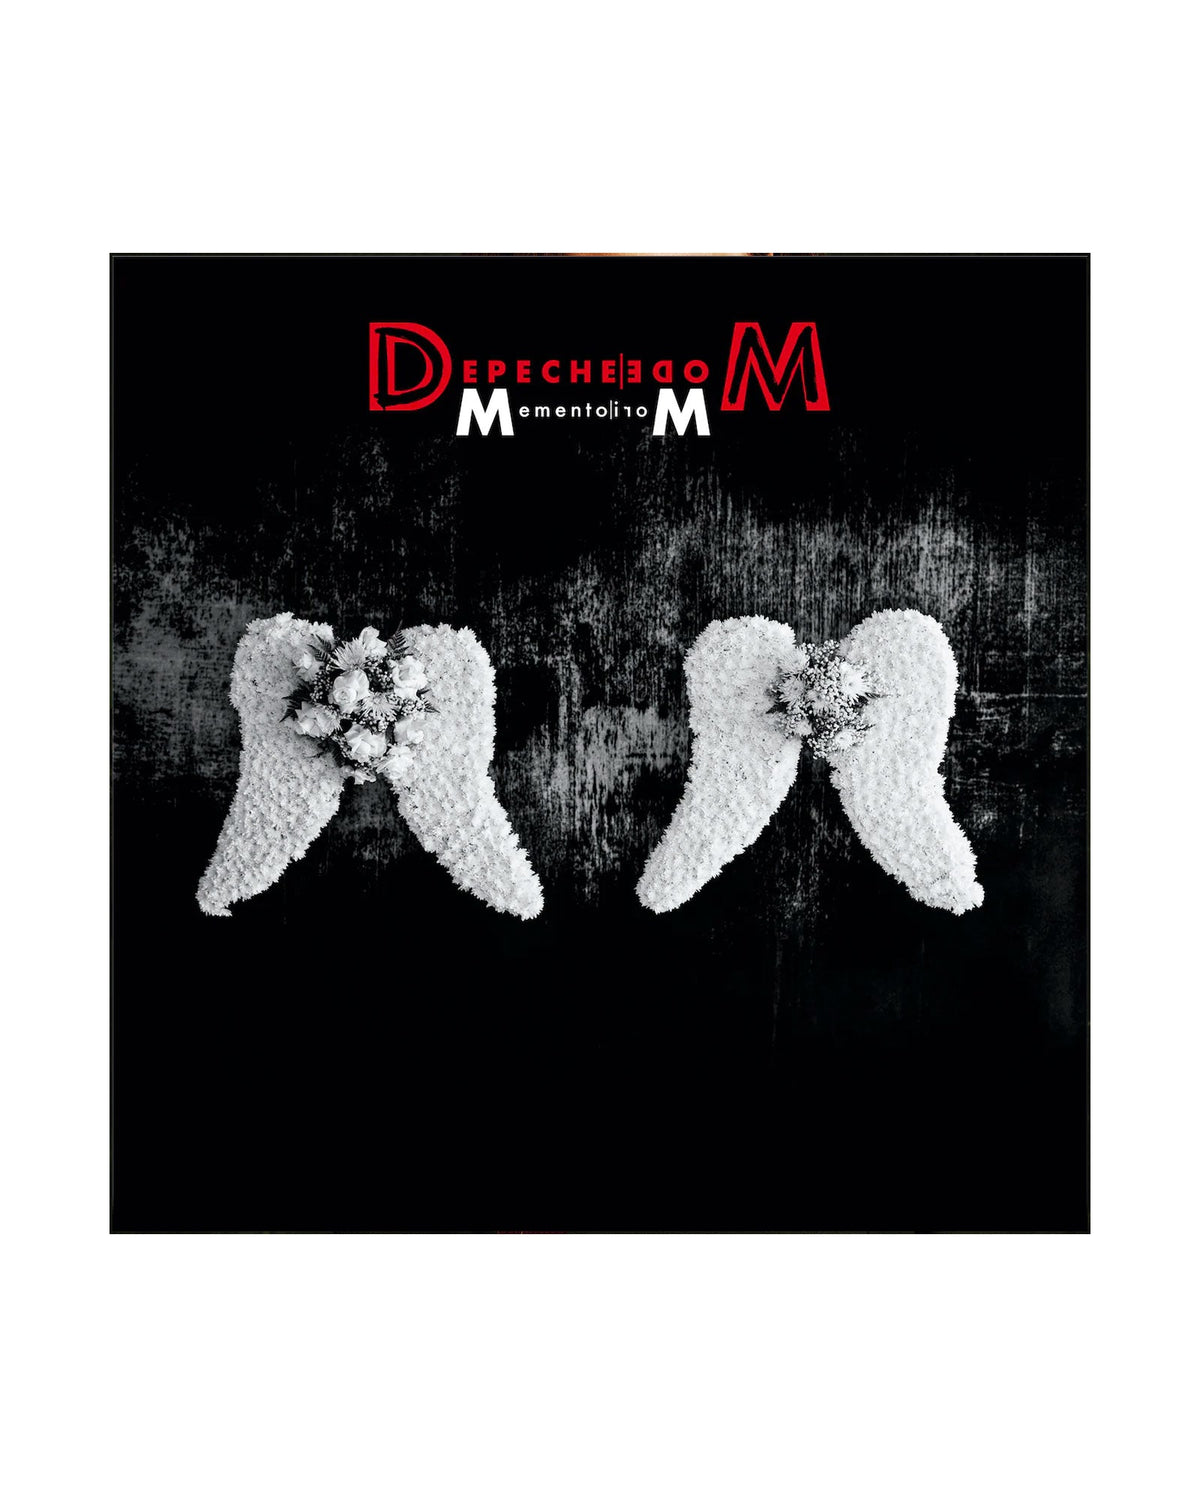 Depeche Mode - CD Deluxe "Memento Mori" - Rocktud - Rocktud